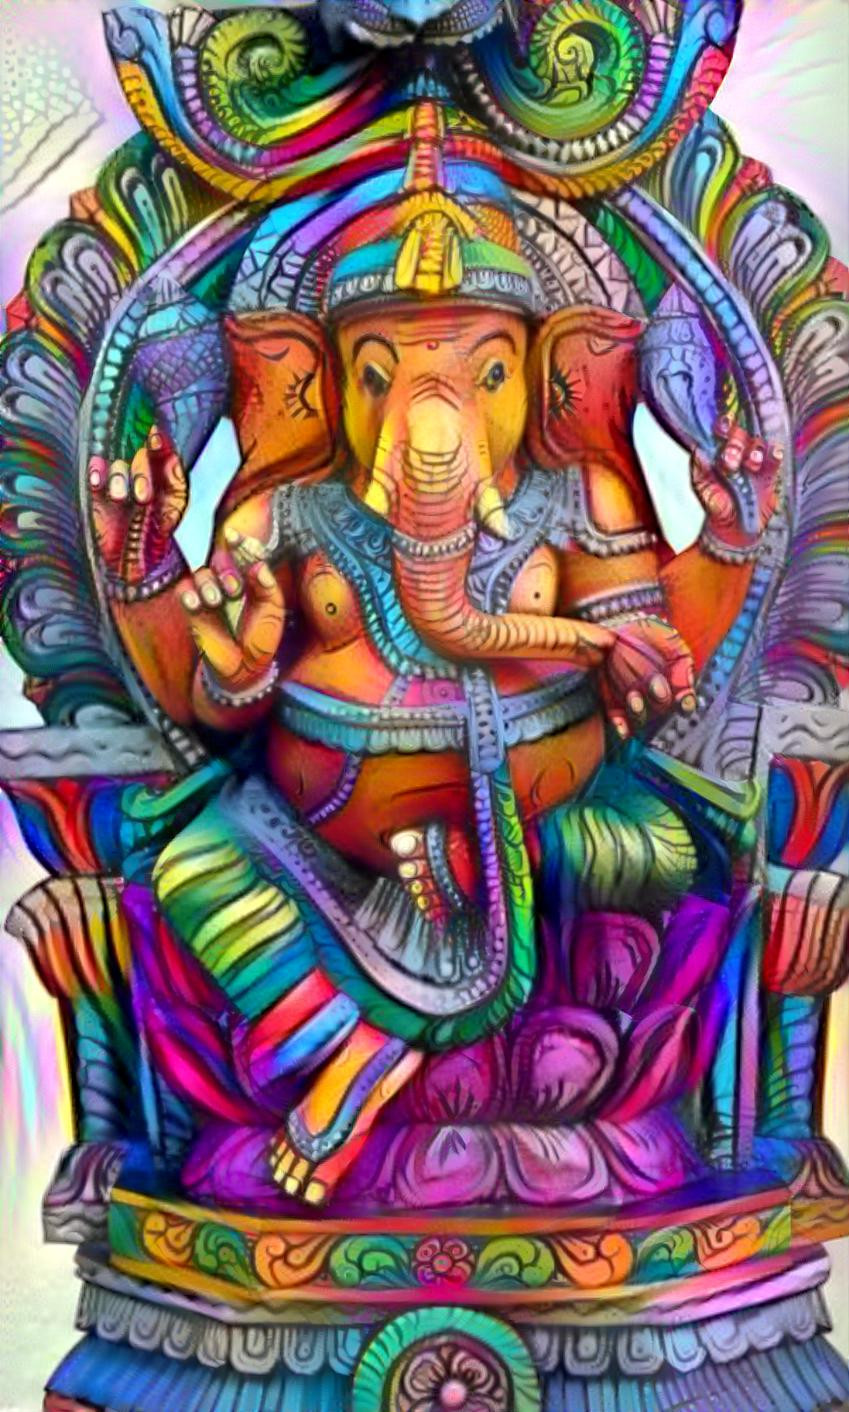 Indian deity